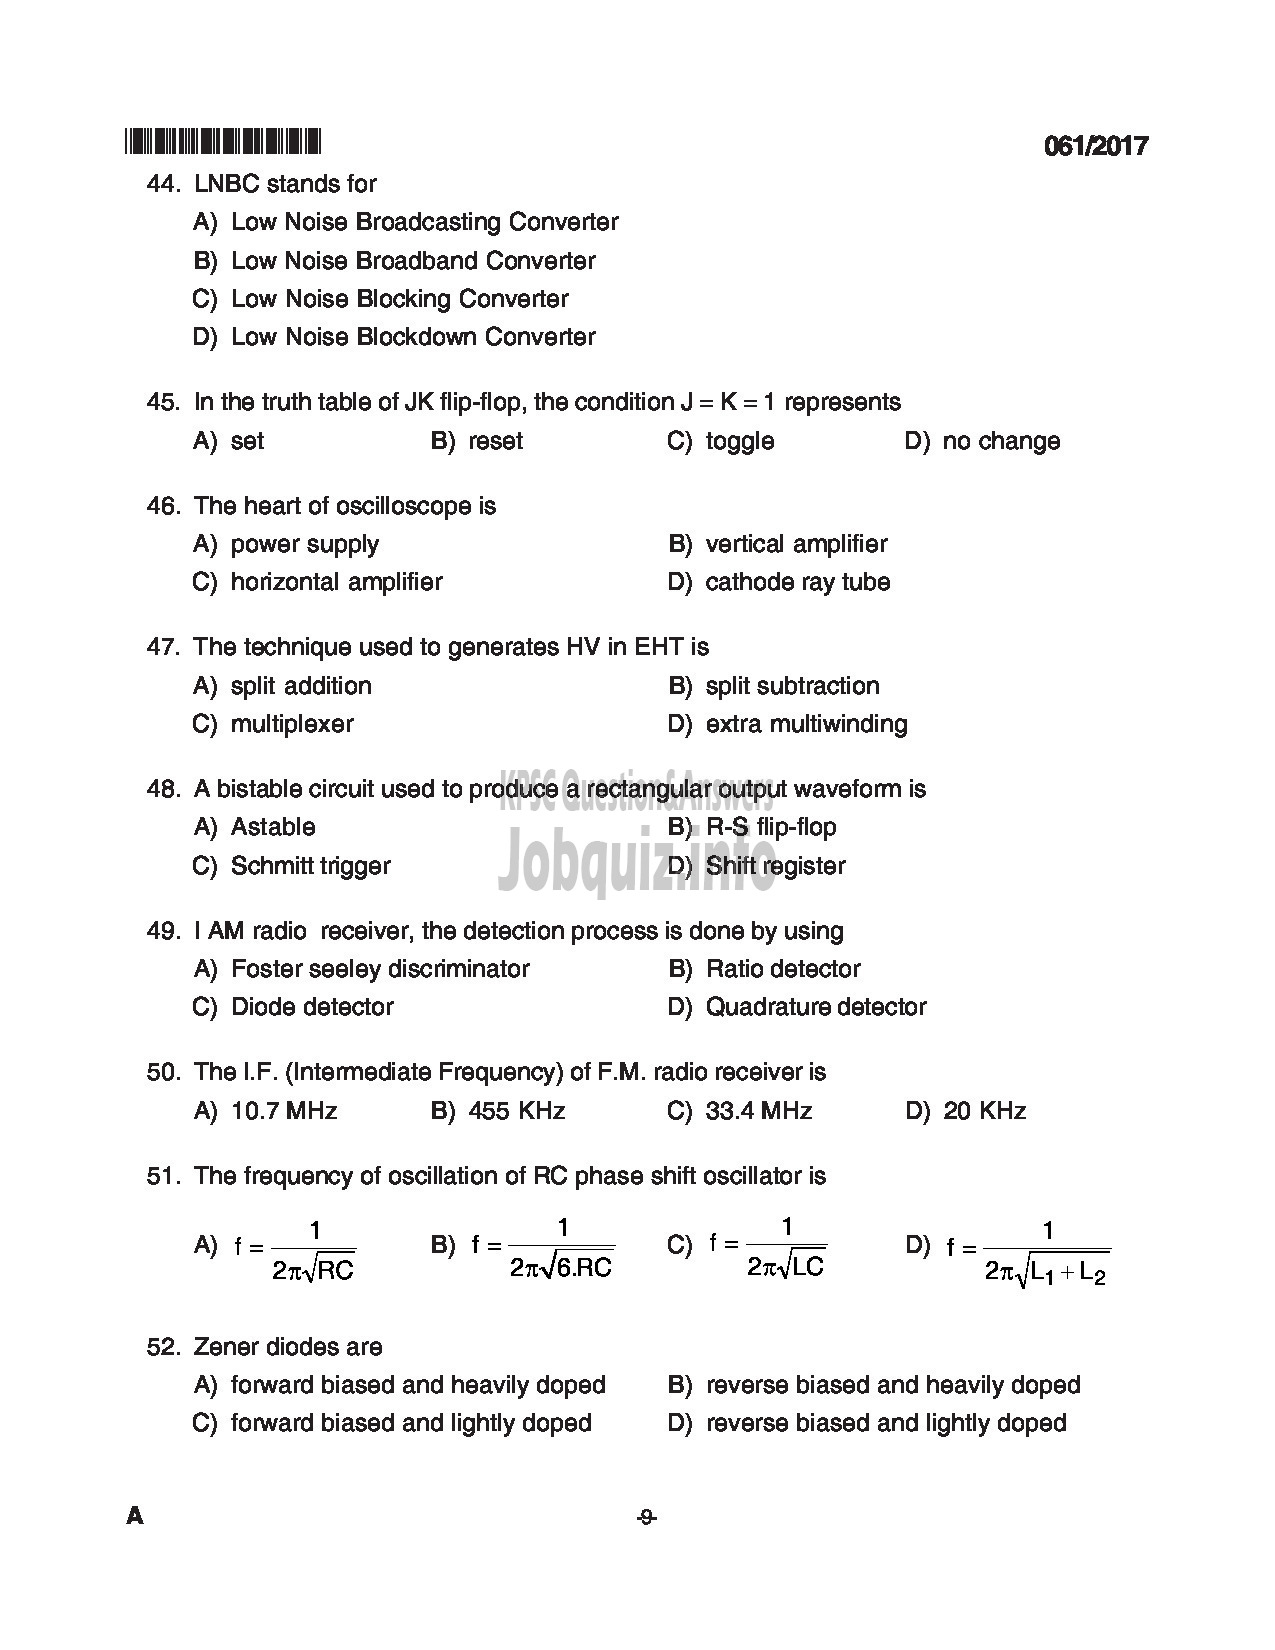 Kerala PSC Question Paper - TRADESMAN ELECTRONICS TECHNICAL EDUCATION QUESTION PAPER-9